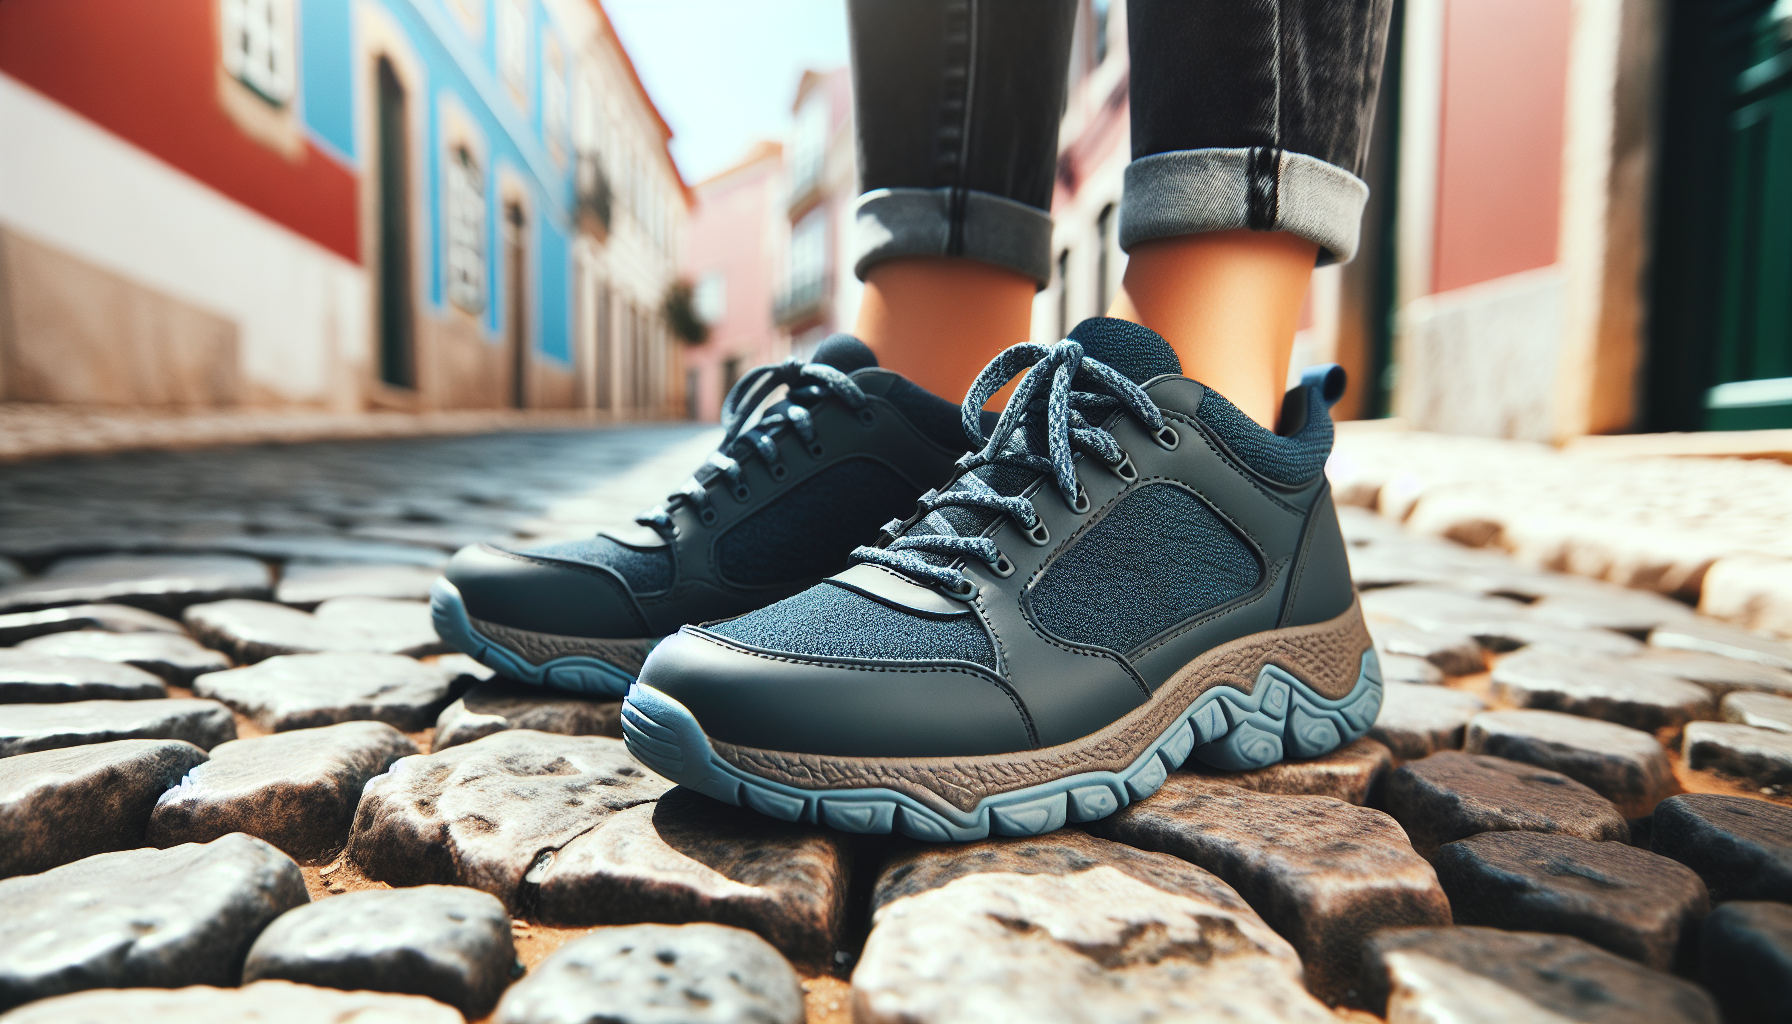 Comfortable walking shoes for navigating Portuguese terrain